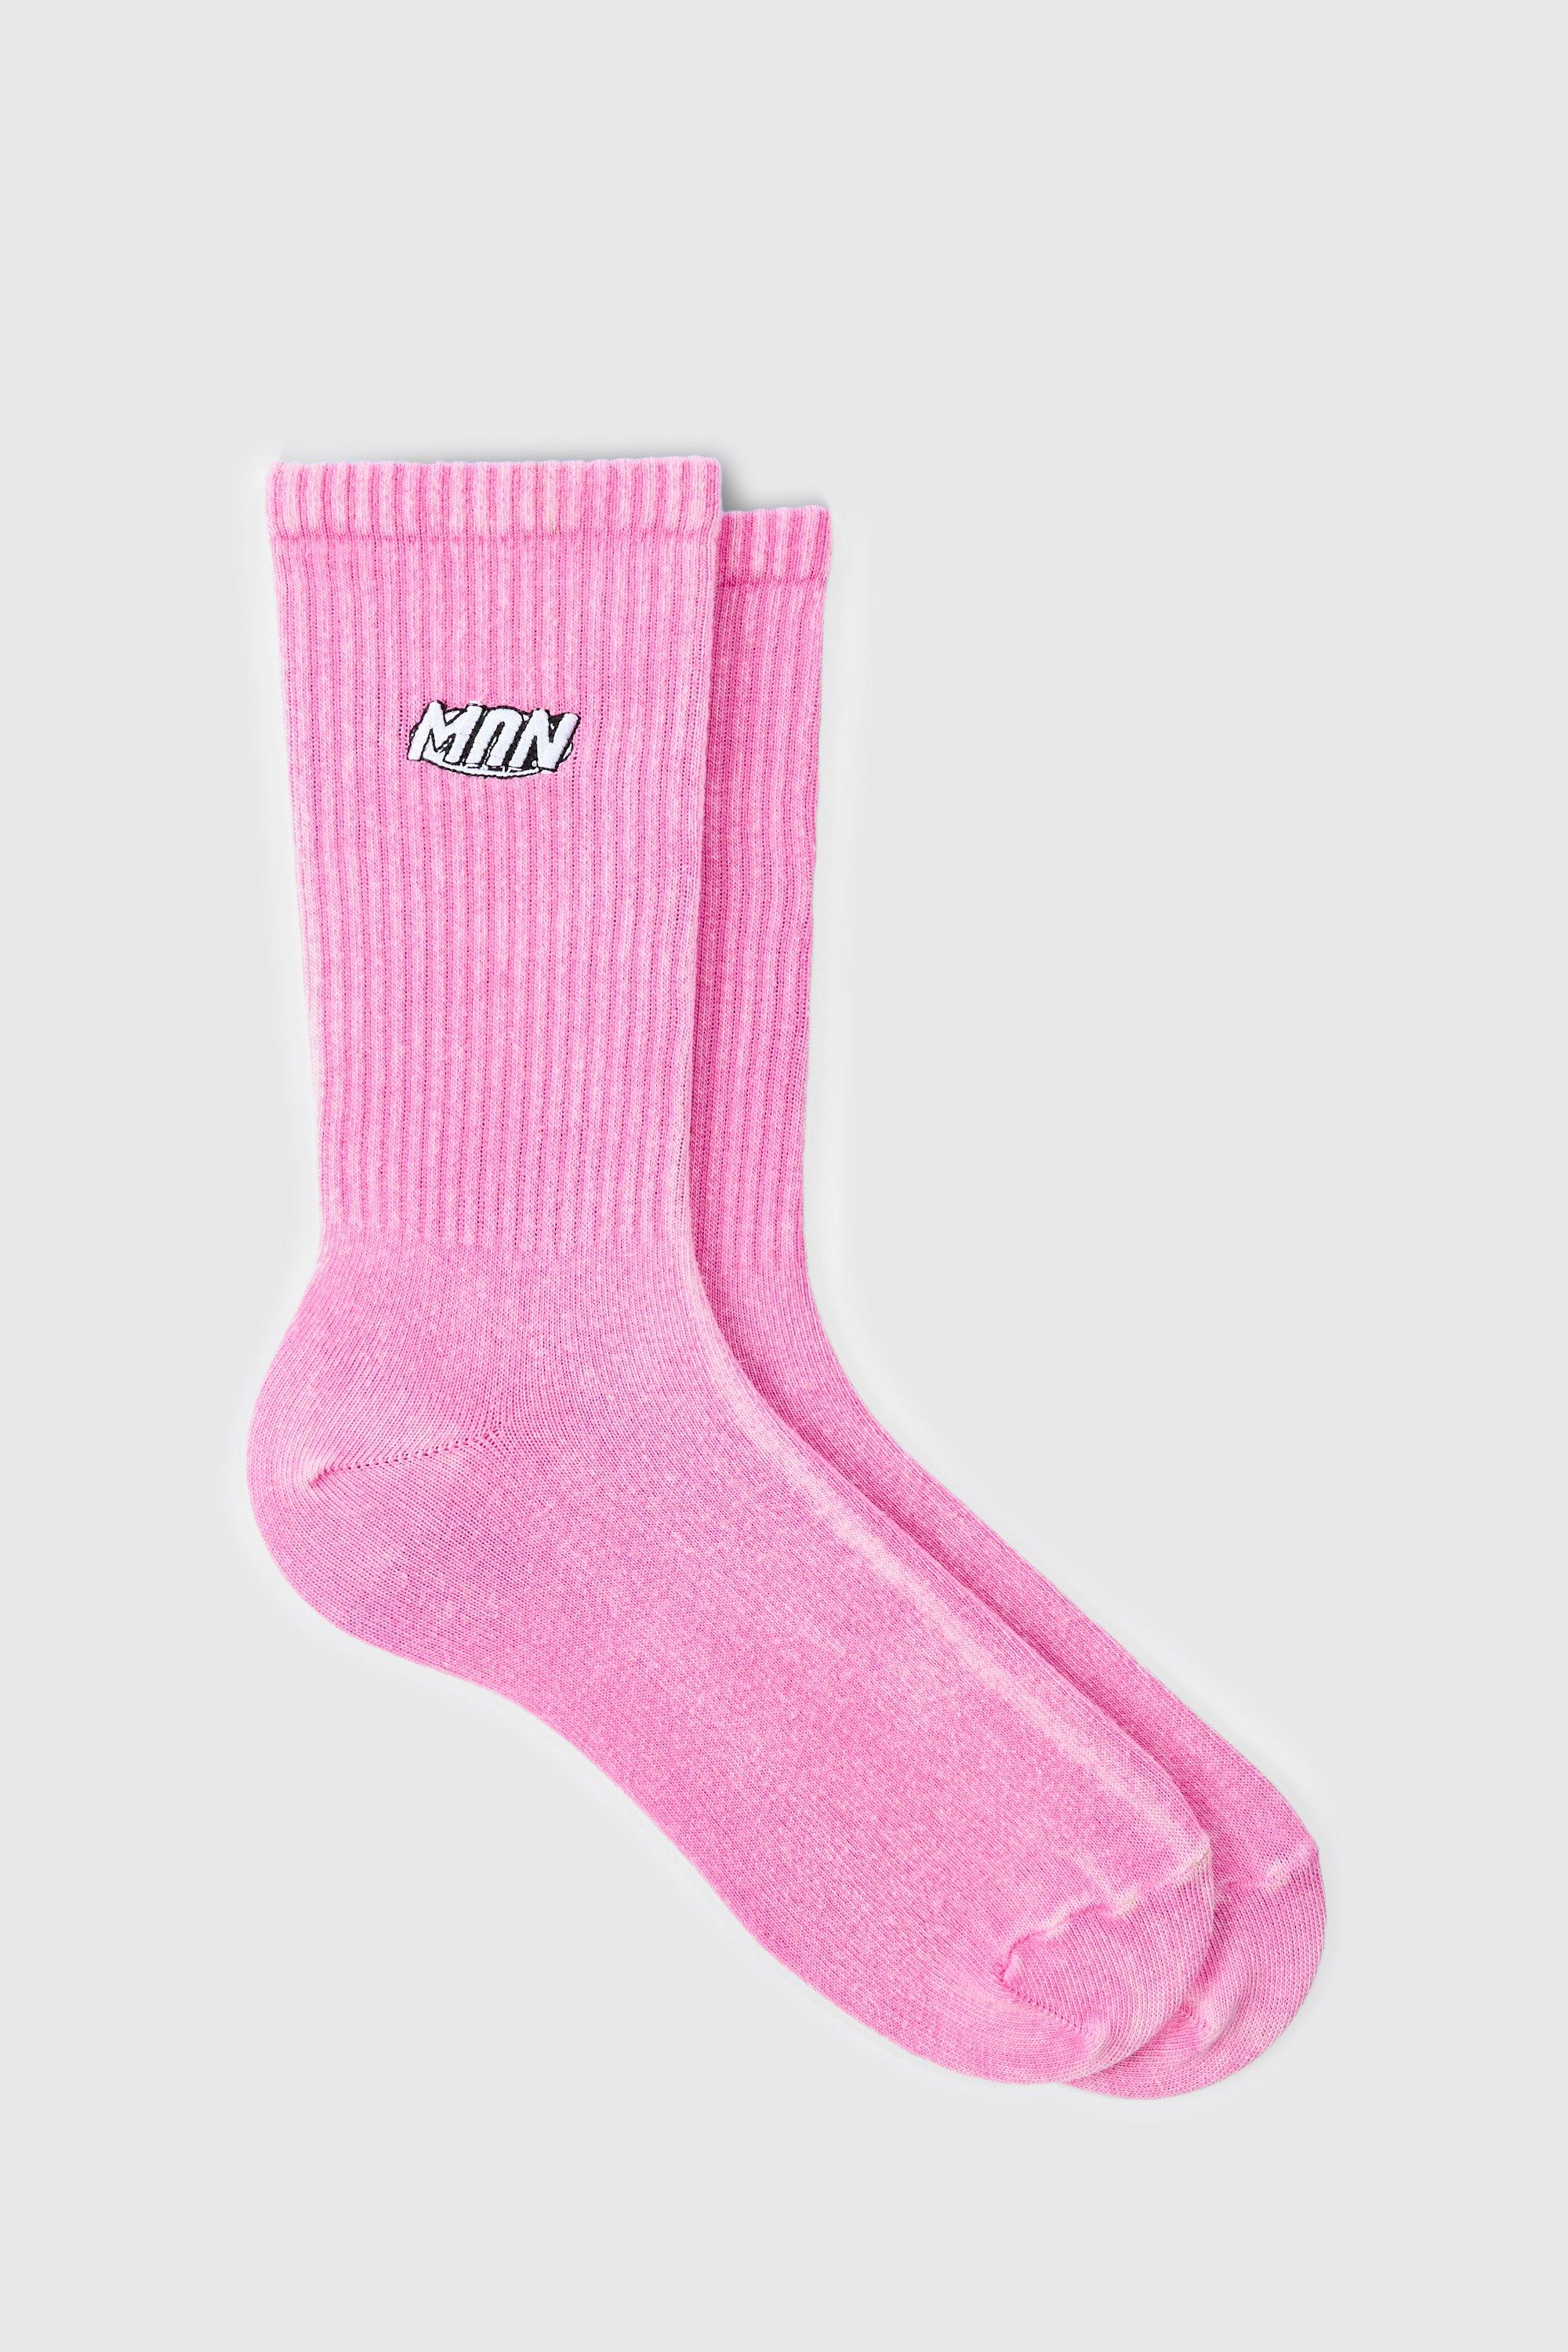 Image of Acid Wash Man Socks In Pink, Pink